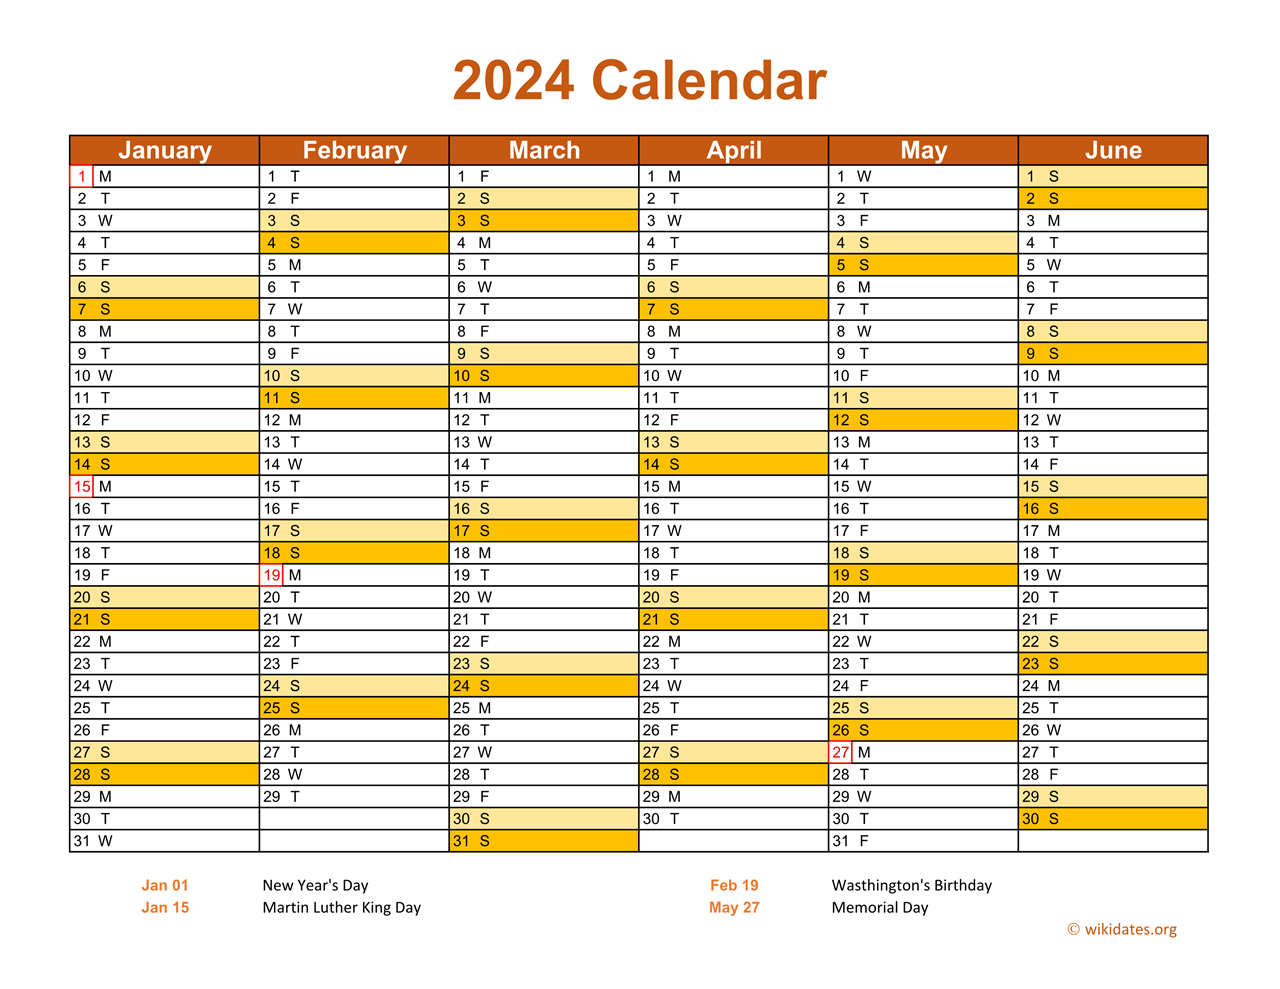 2024 Calendar on 2 Pages, Landscape Orientation | WikiDates.org